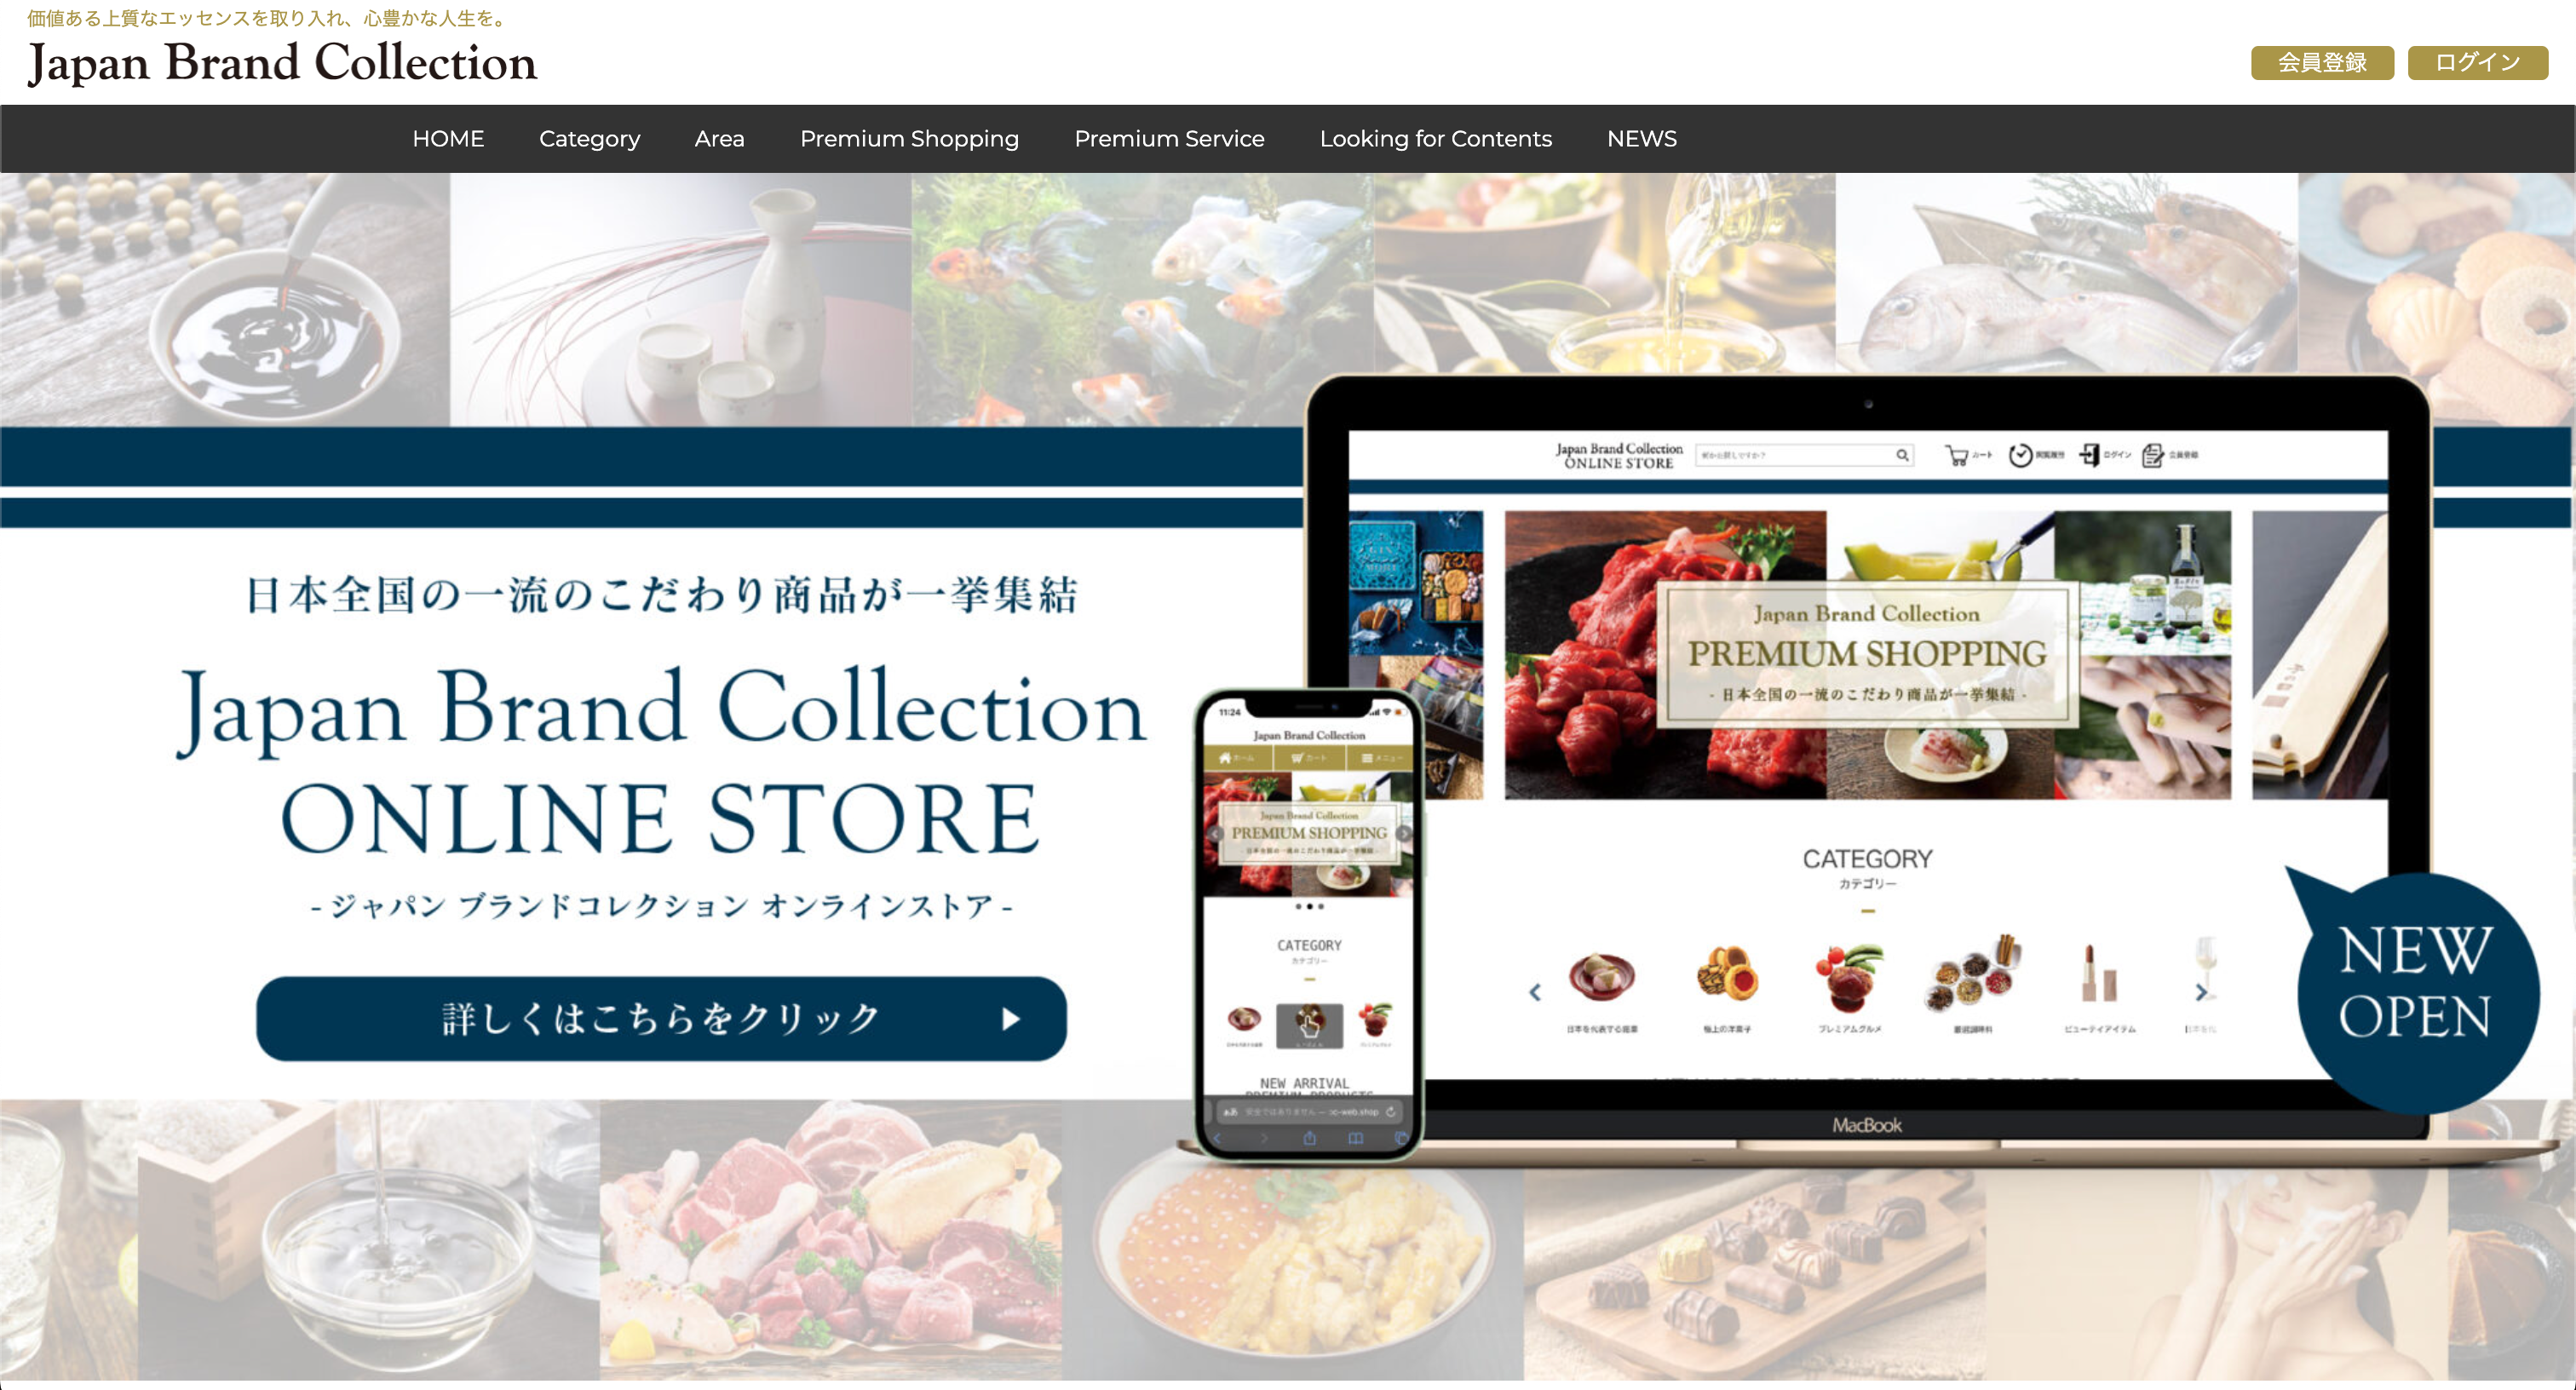 Japan Brand Collection公式サイトに掲載されました。